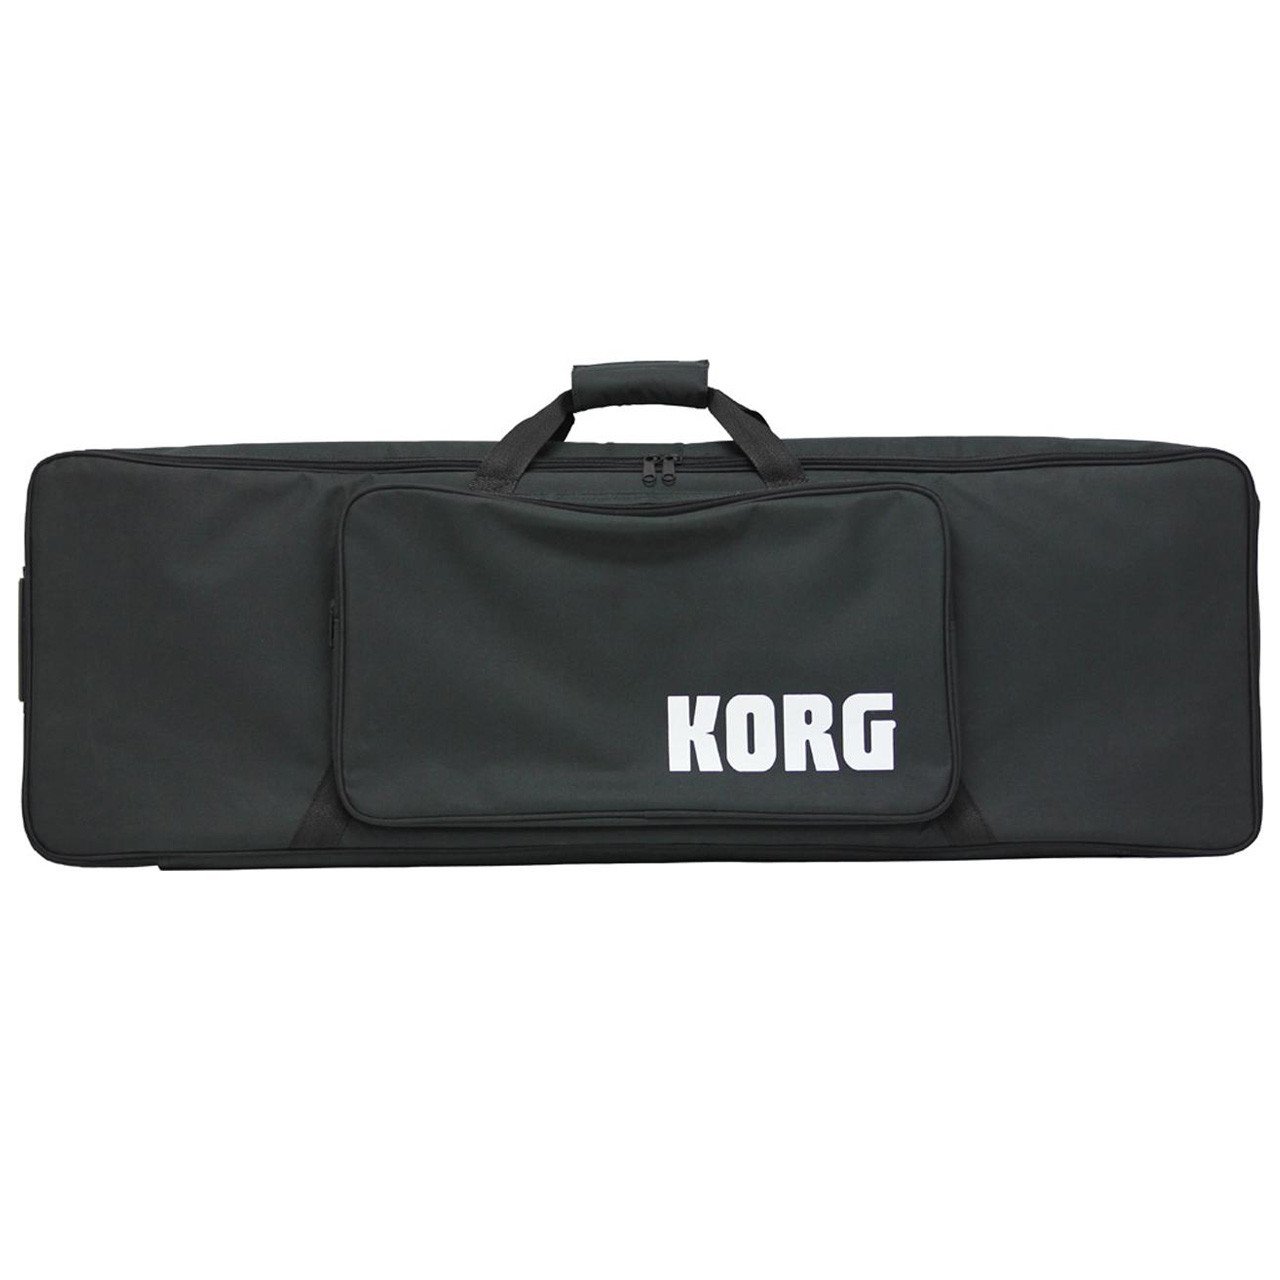 Keyboard Accessories - Korg Krome 61 Soft Case